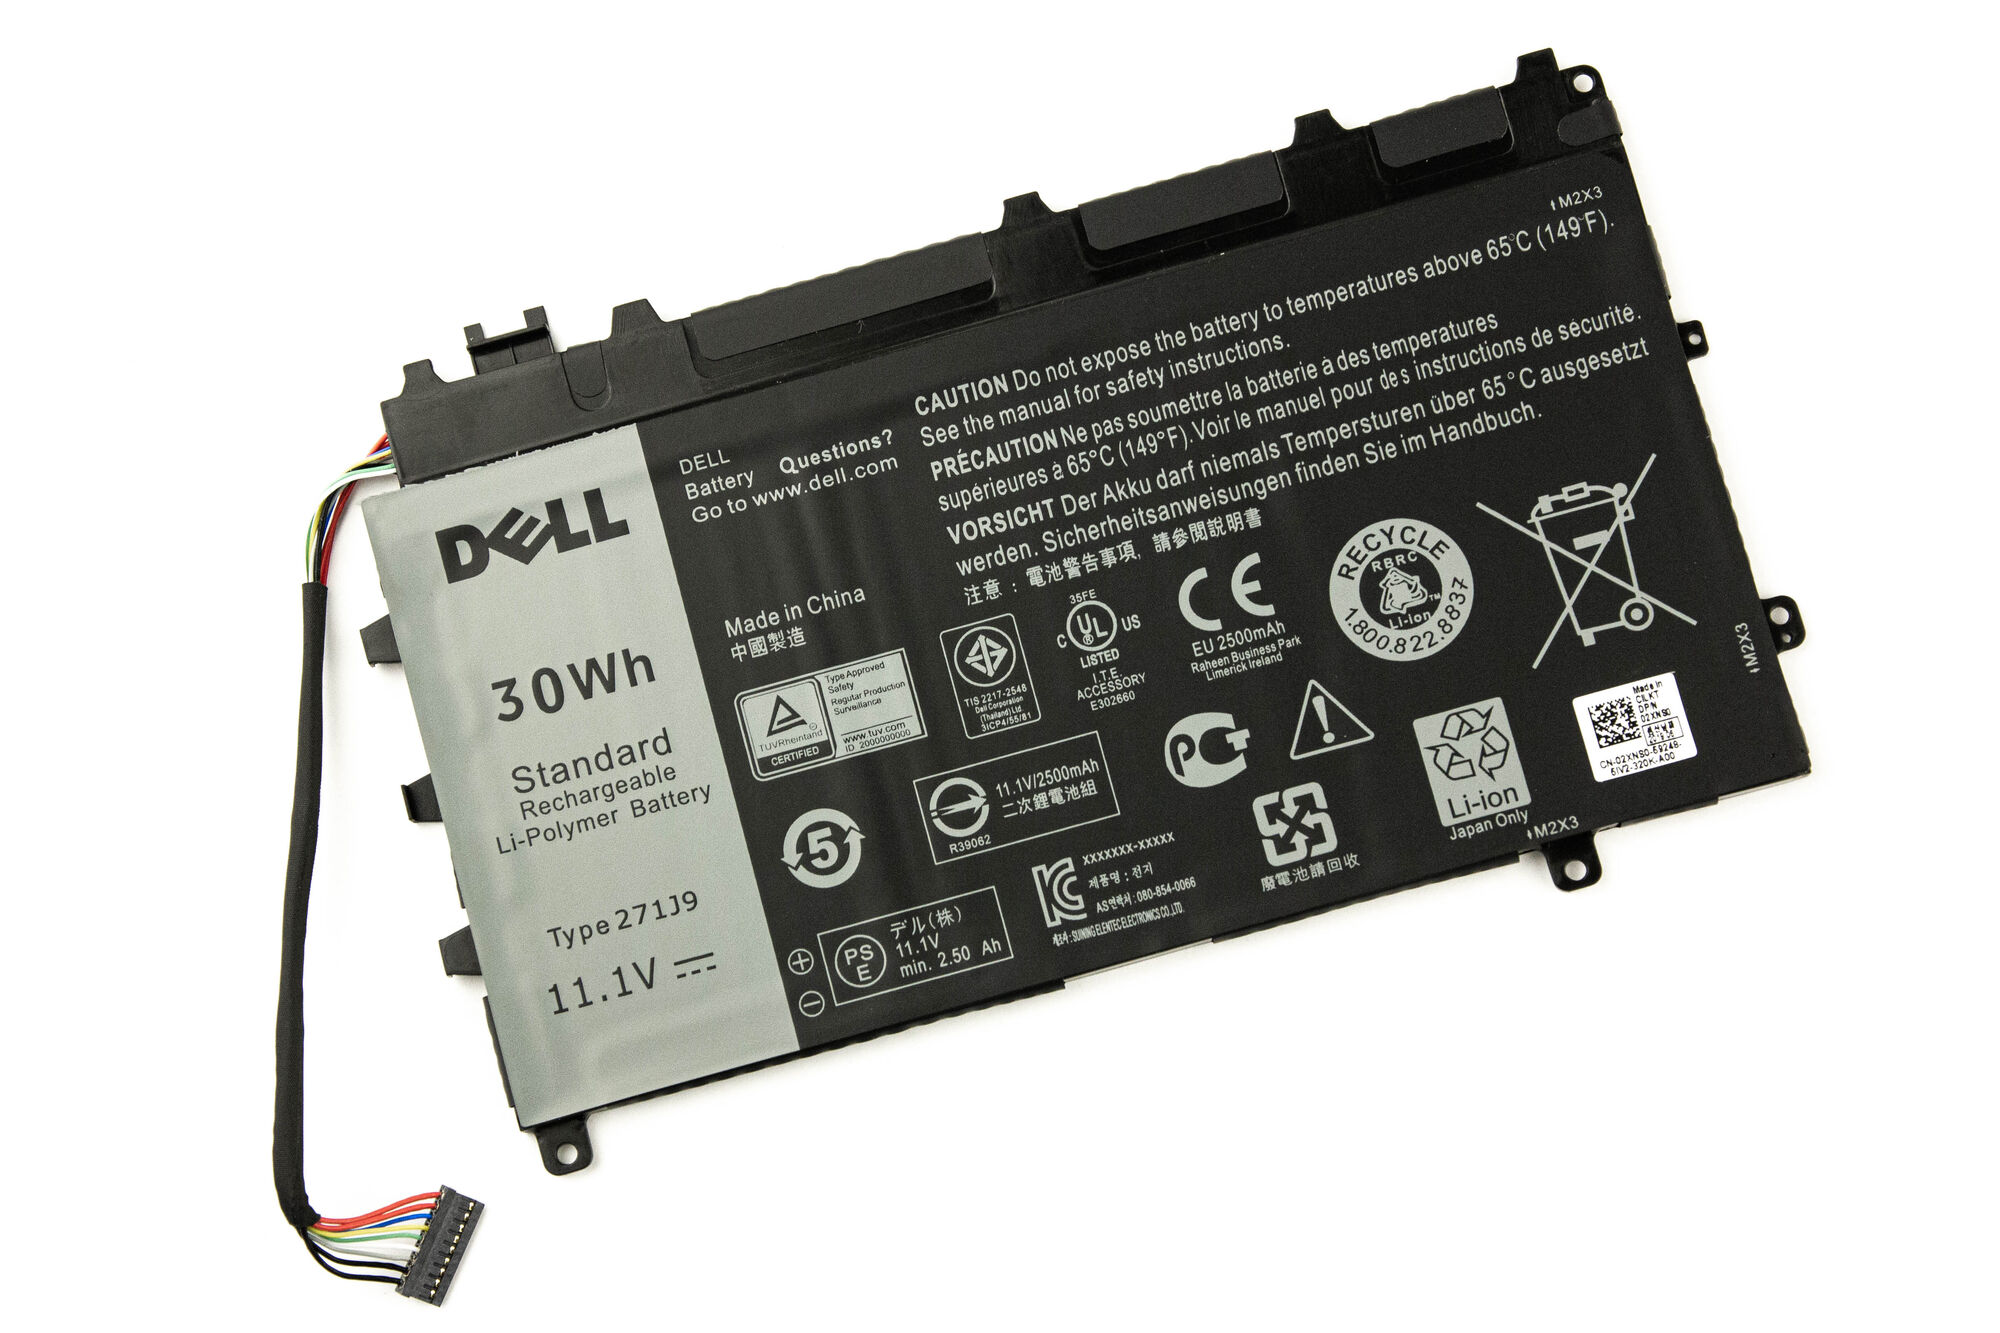 Аккумулятор для Dell 7350 ORG (11.1V 2500mAh) p/n: 271J9 GWV47 0GWV47 YX81V